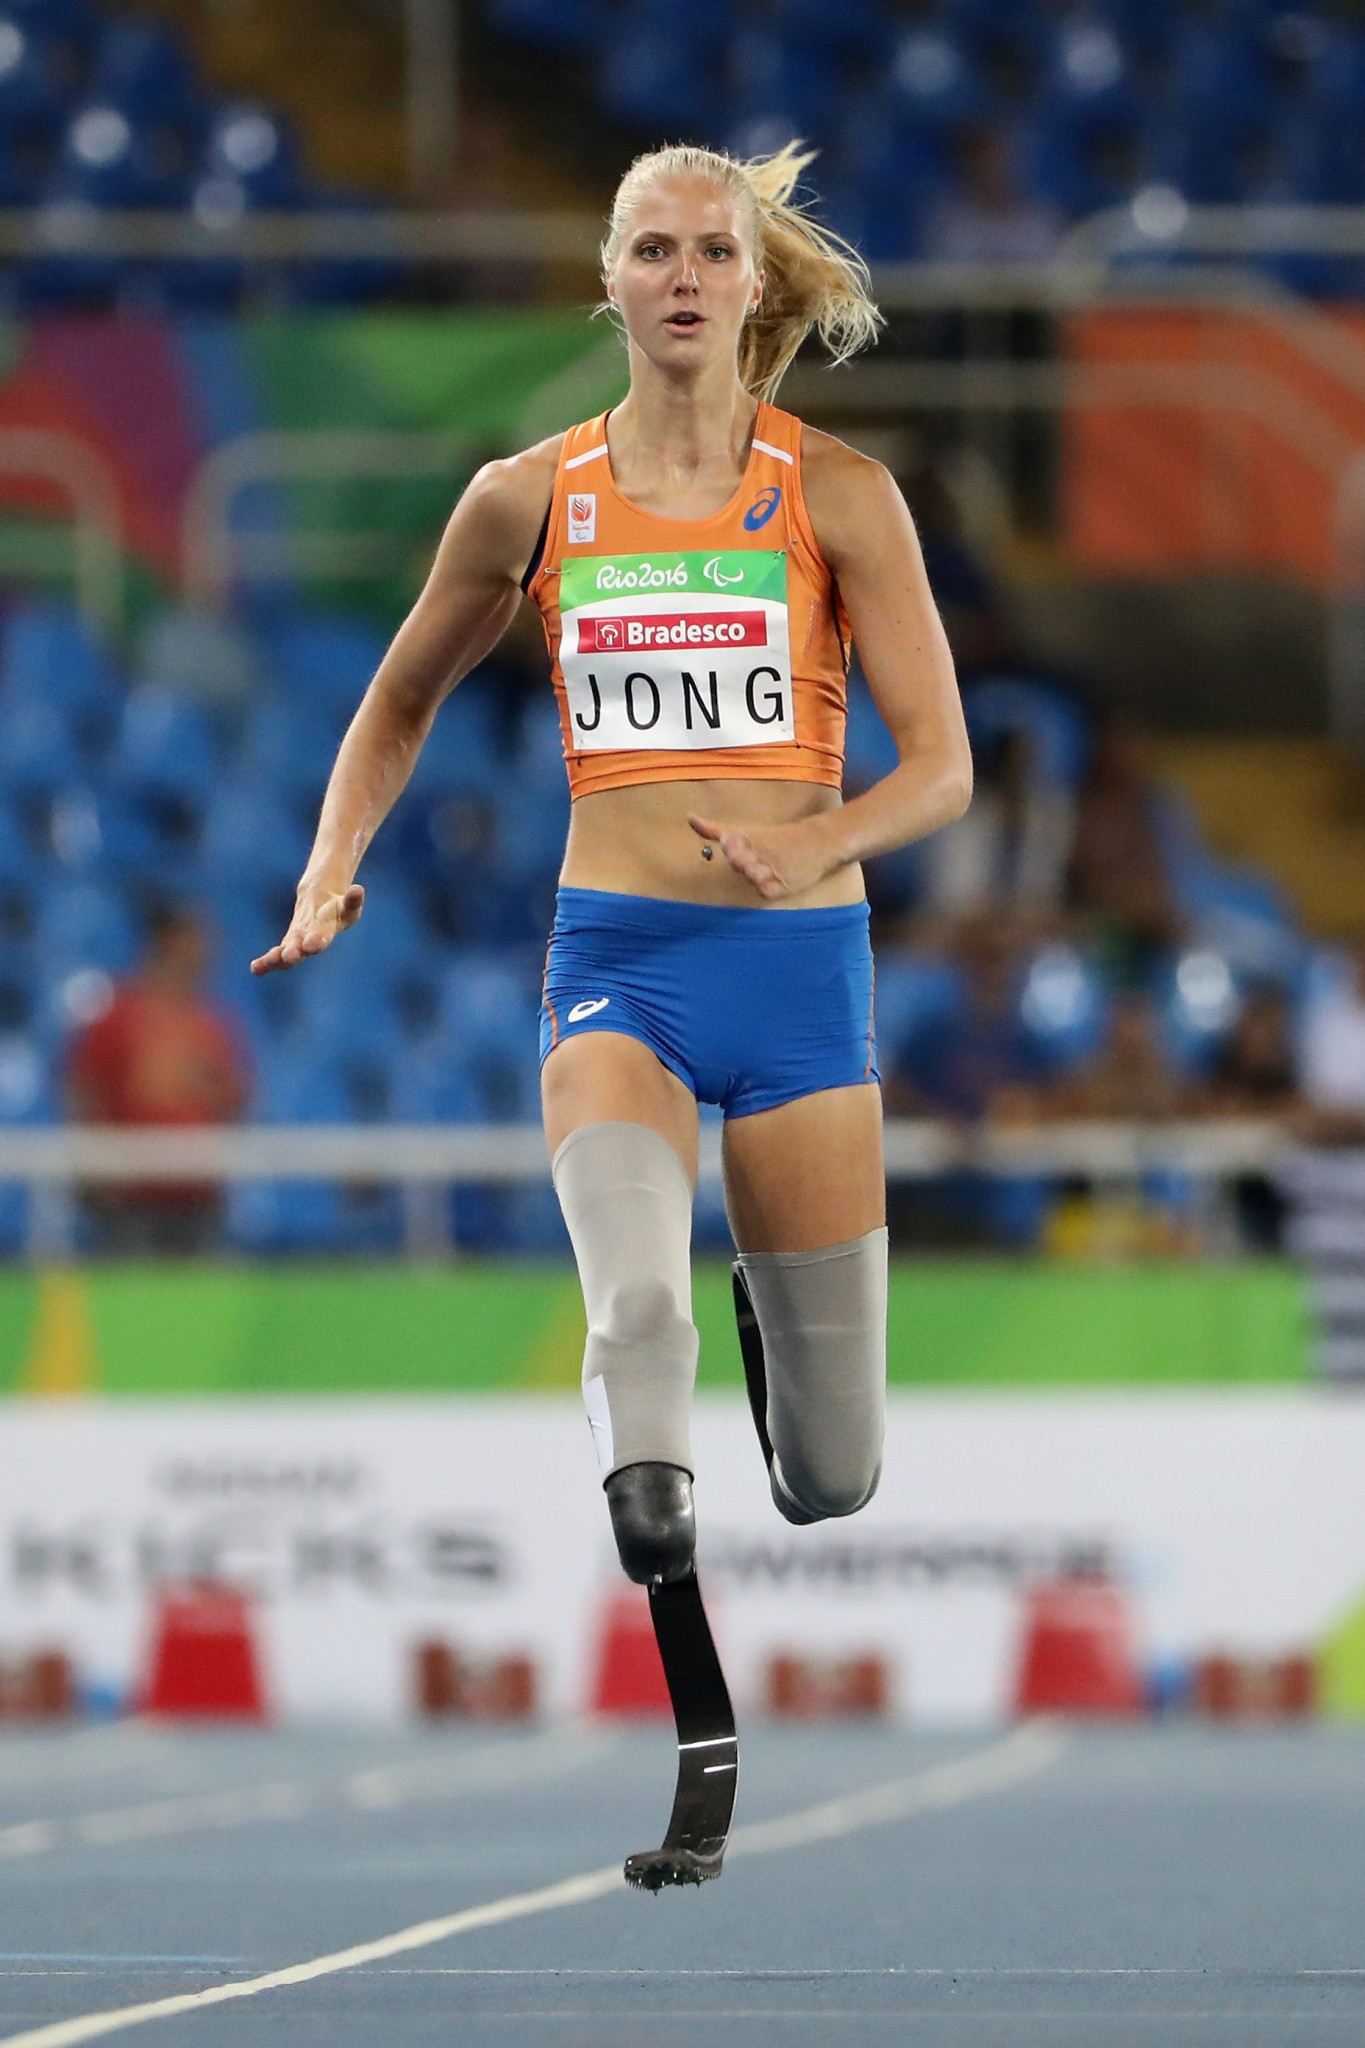 Jong breaks long jump world record as World Para Athletics Grand Prix concludes